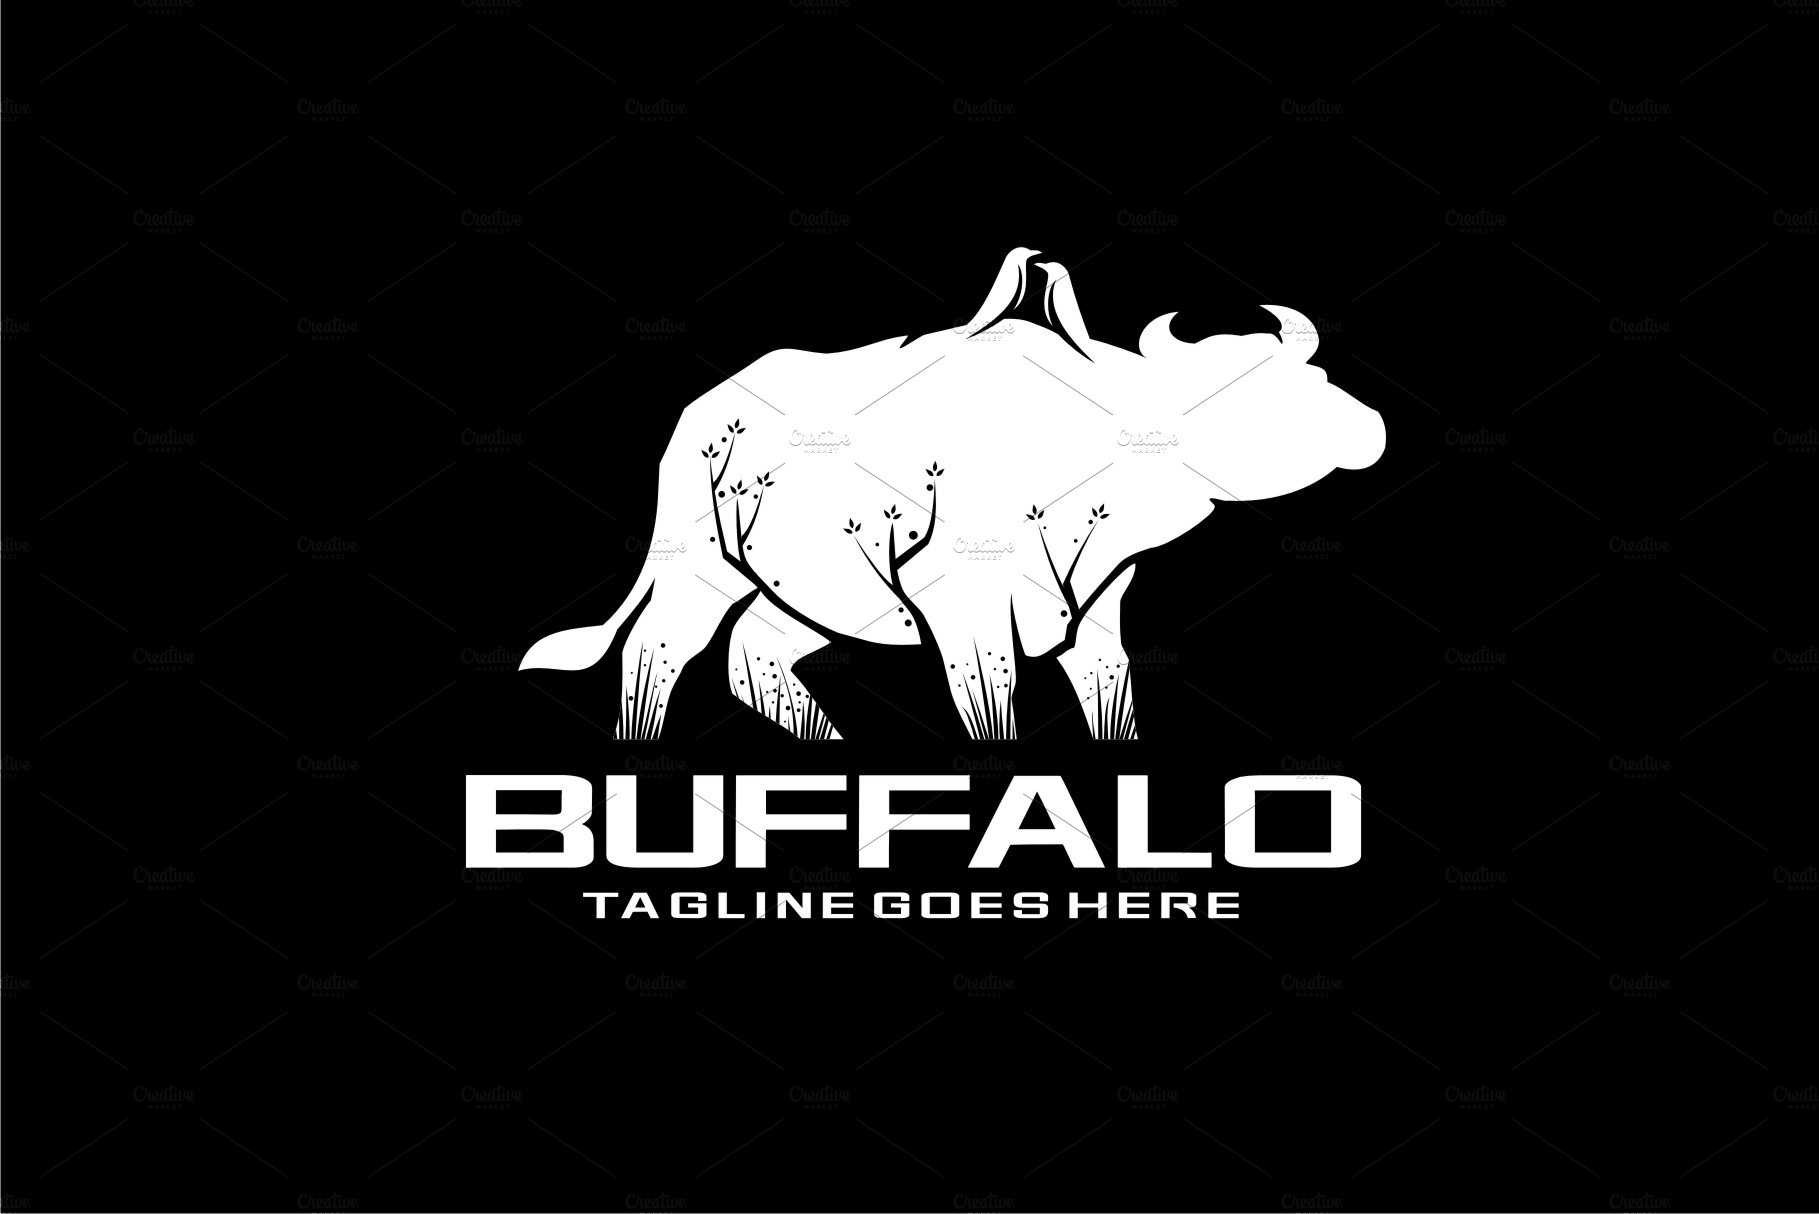 Black Buffalo preview image.